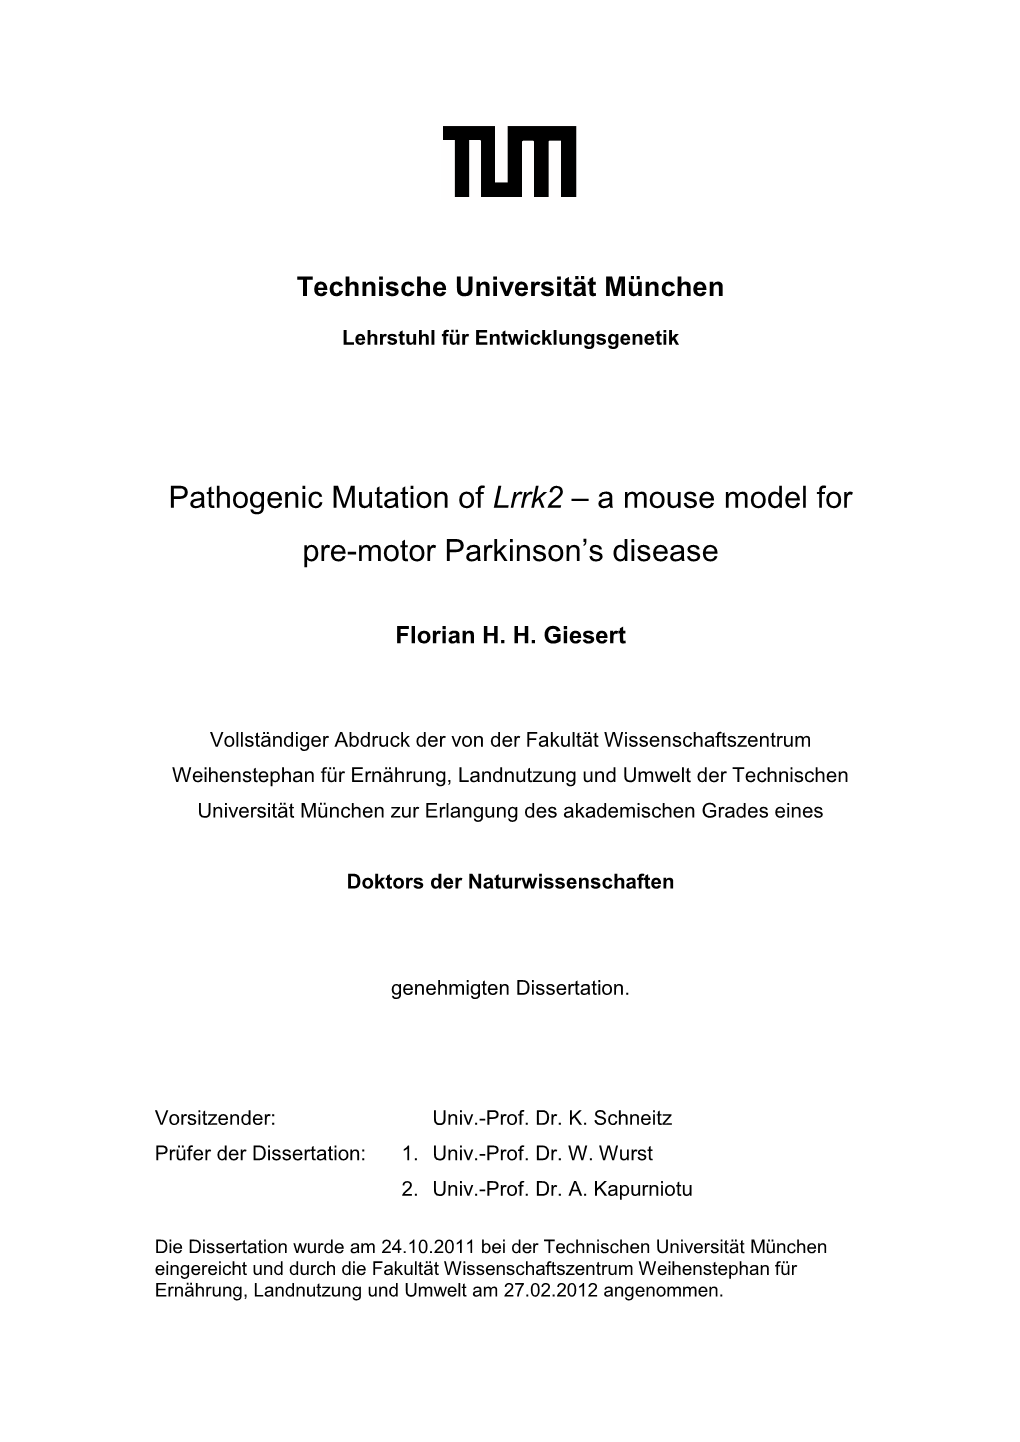 Pathogenic Mutation of Lrrk2 – a Mouse Model for Pre-Motor Parkinson’S Disease